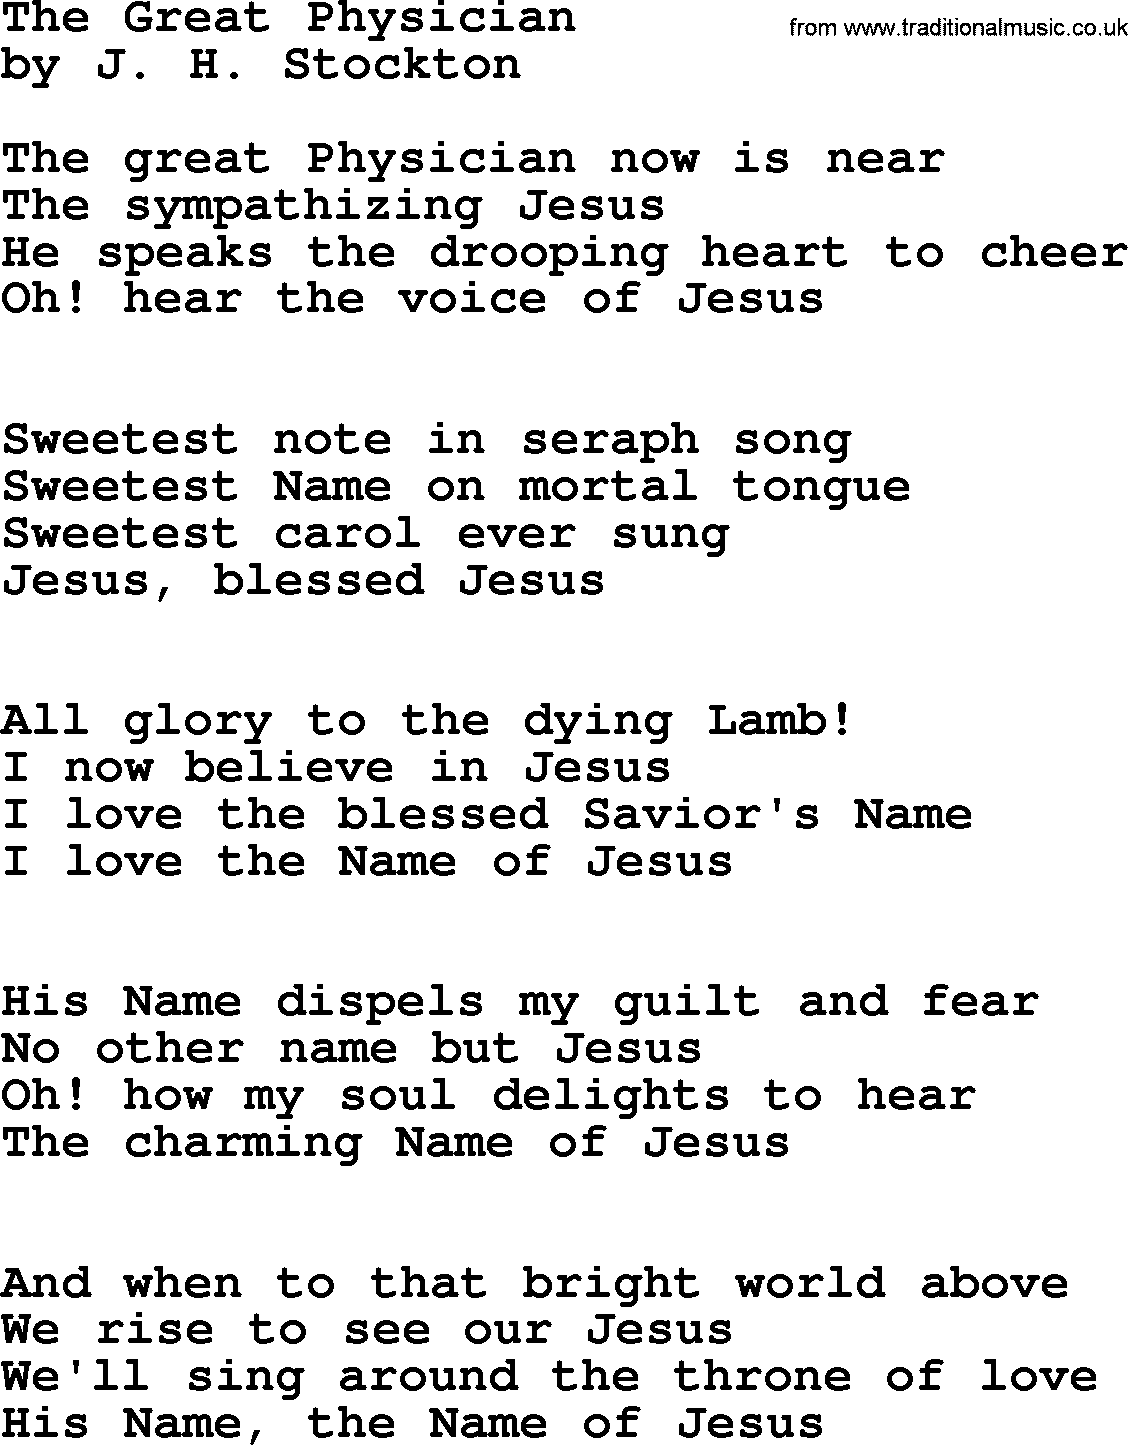 Top 500 Hymn: The Great Physician, lyrics